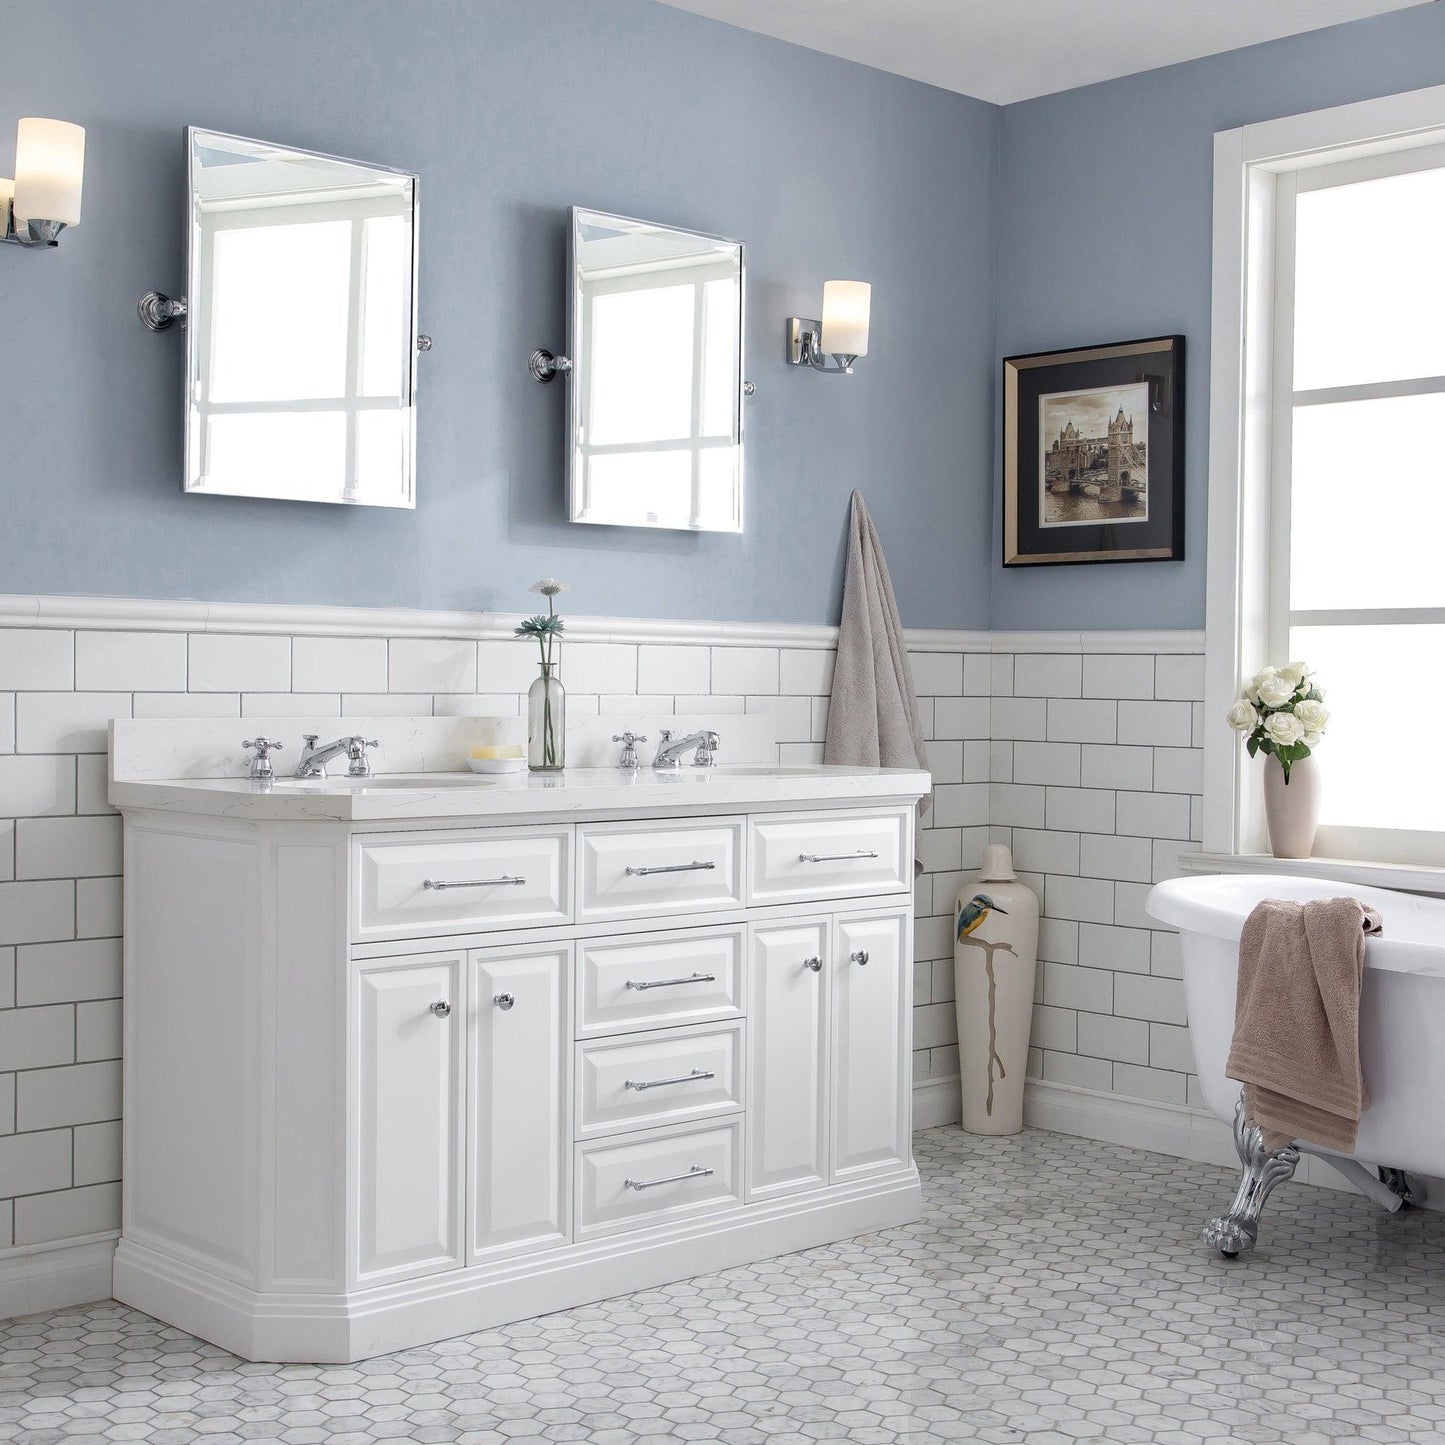 Water Creation Palace 60" Quartz Carrara Pure White Bathroom Vanity Set With Hardware in Chrome Finish